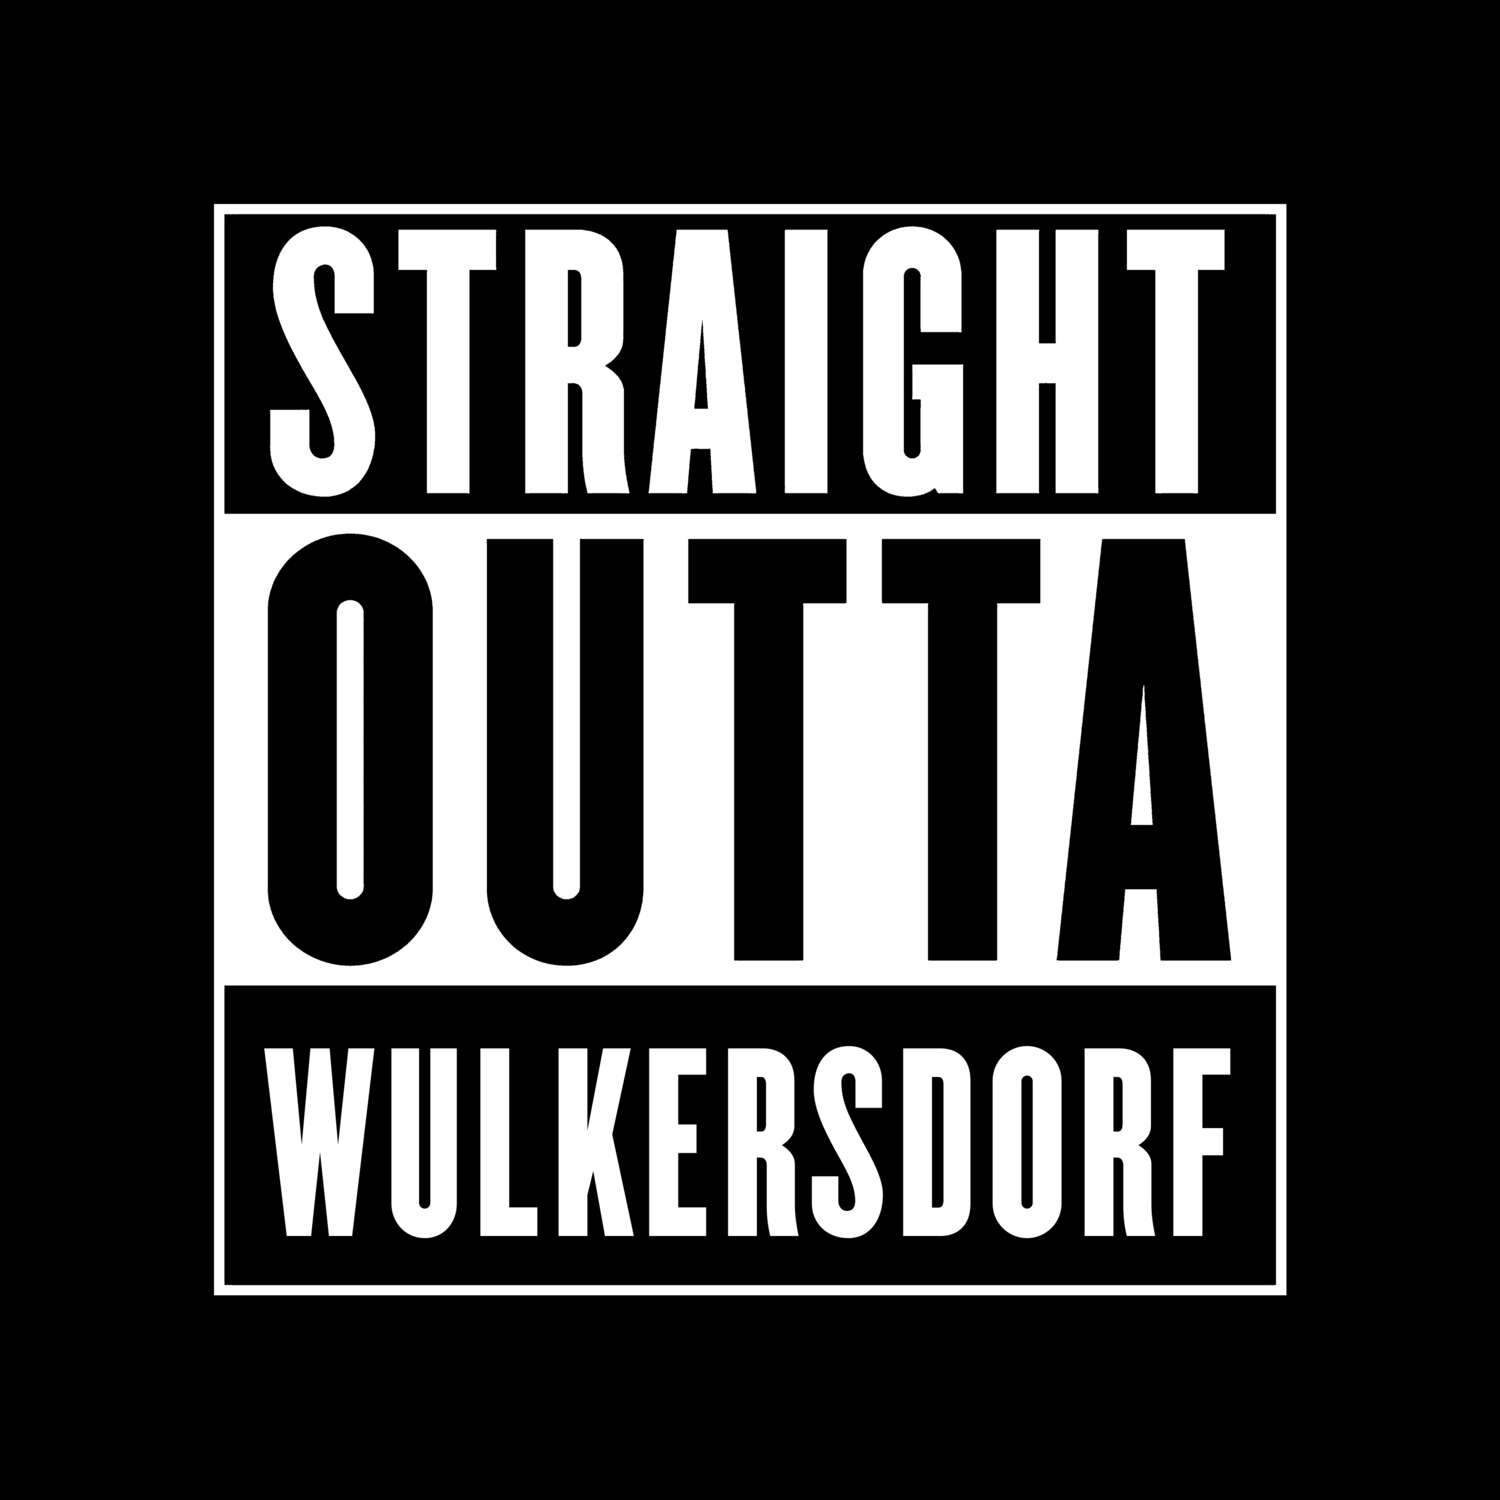 Wulkersdorf T-Shirt »Straight Outta«